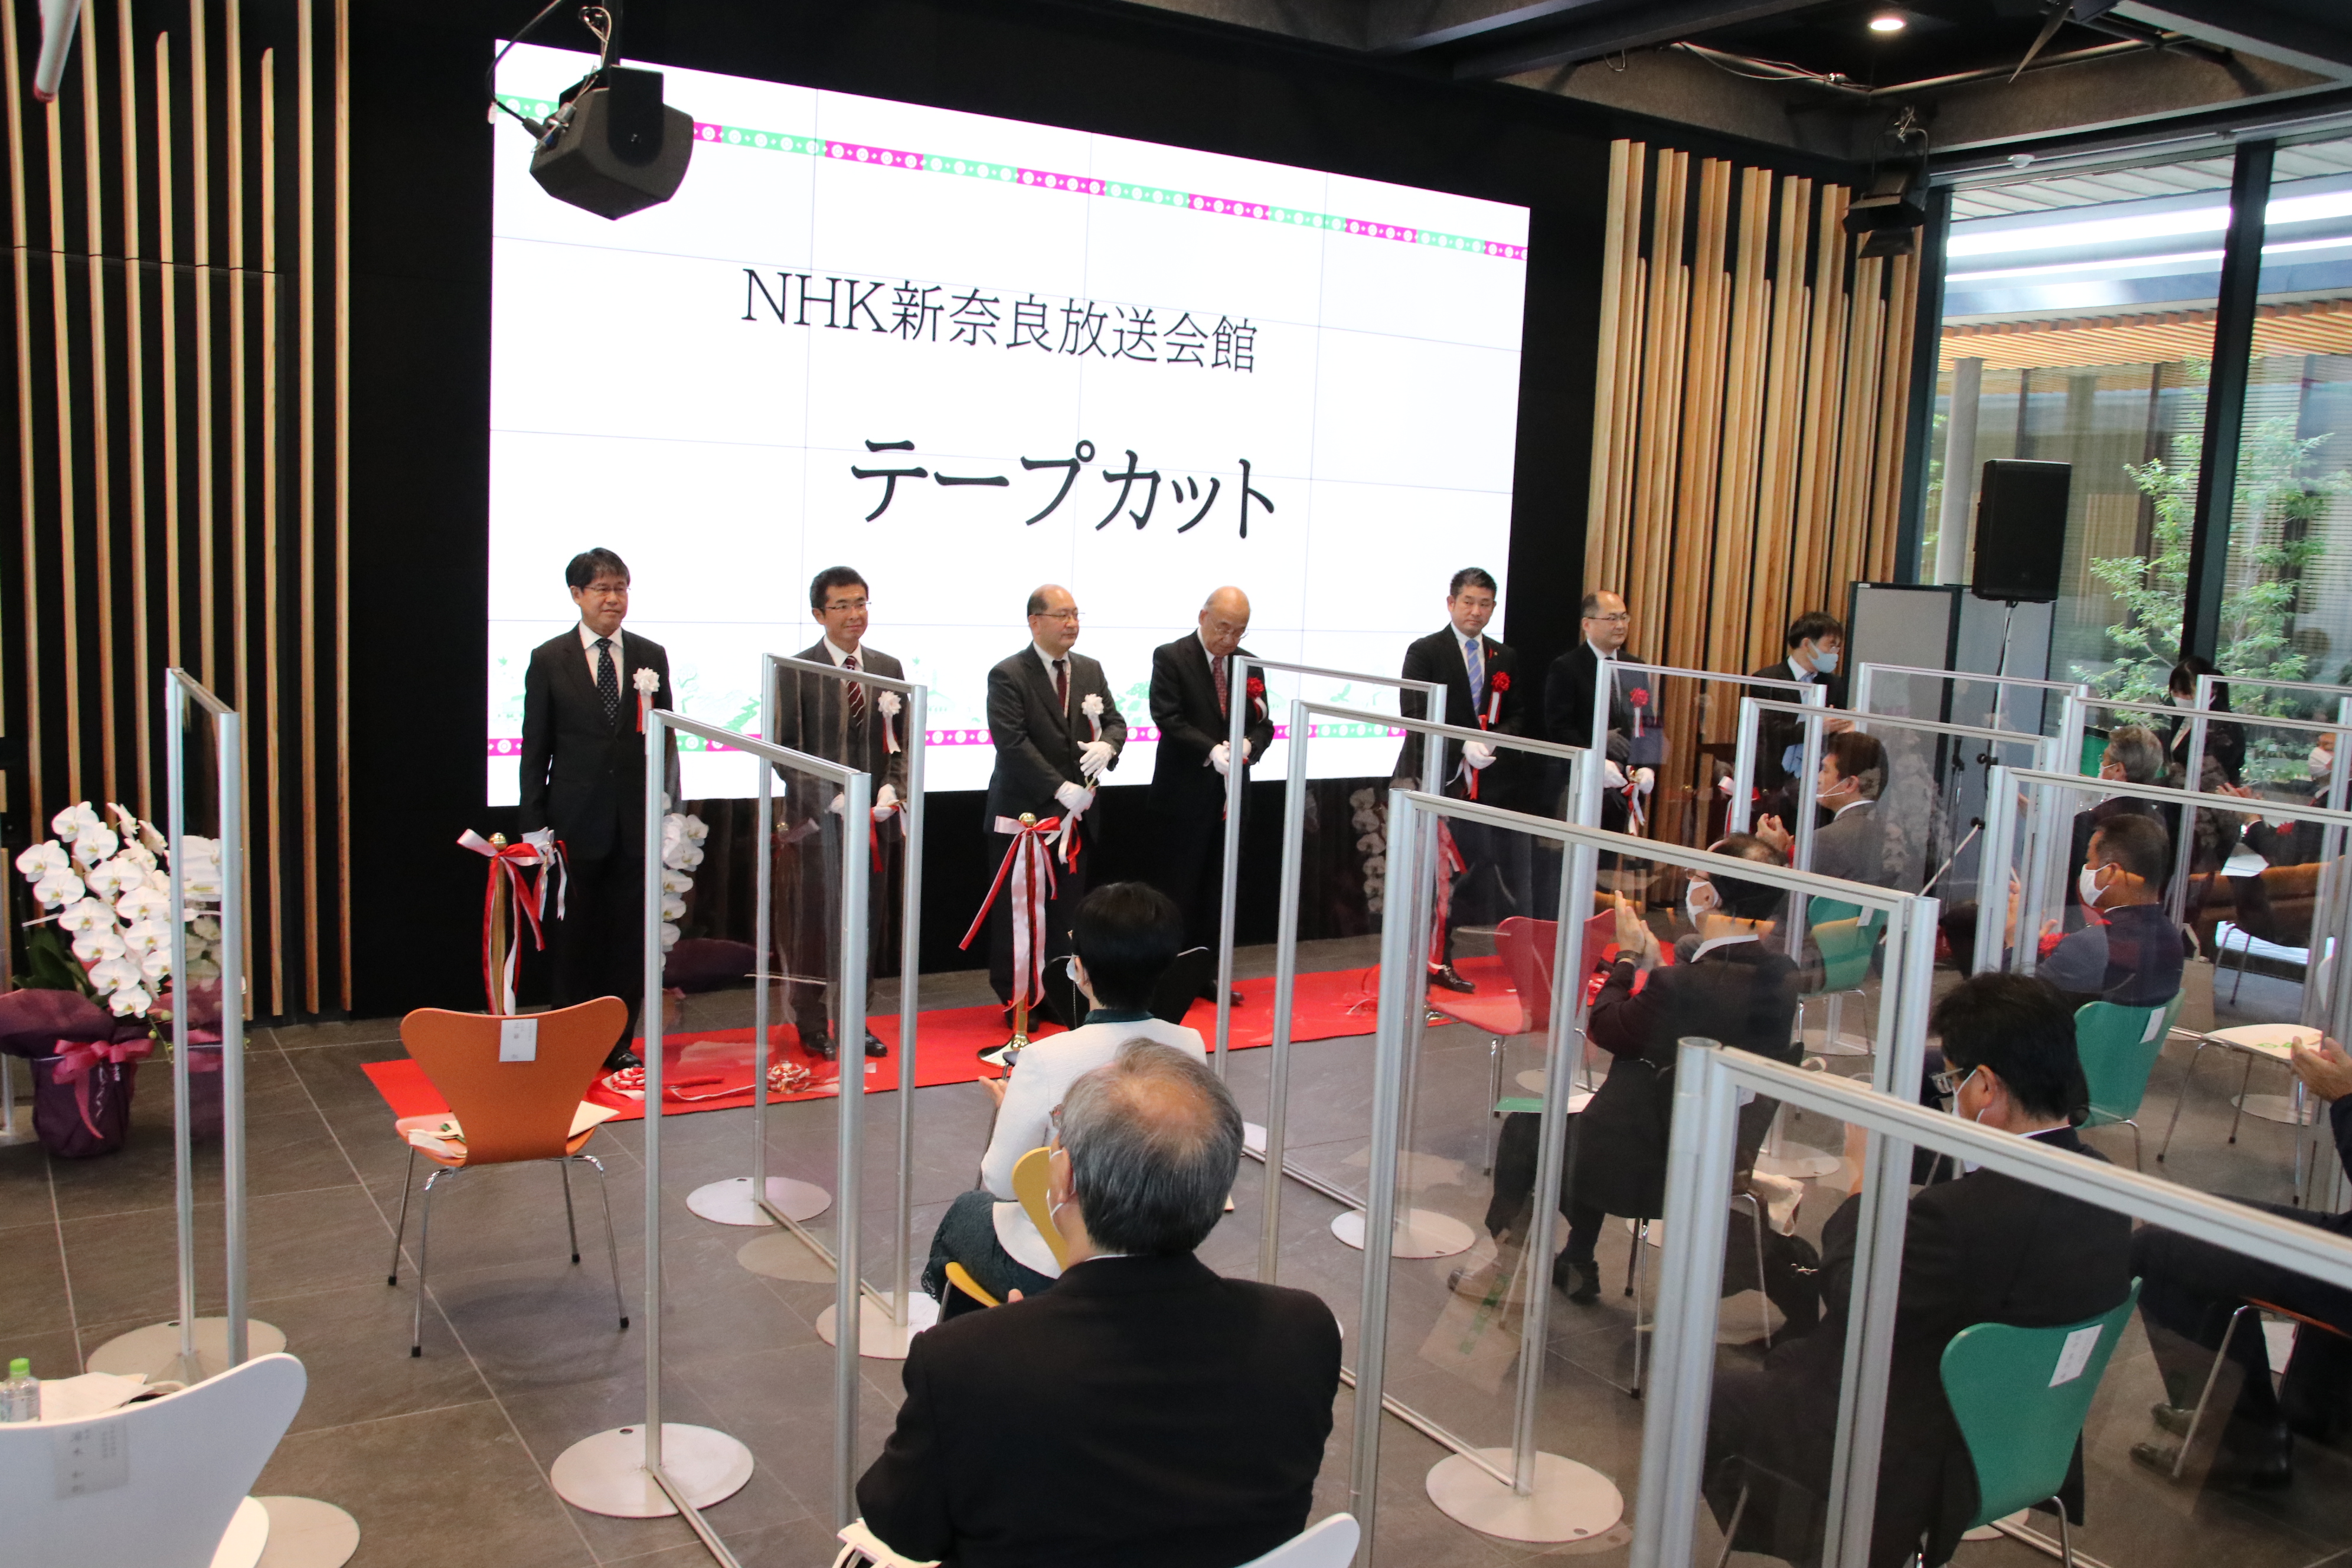 NHK奈良放送局新放送会館オープニング式典